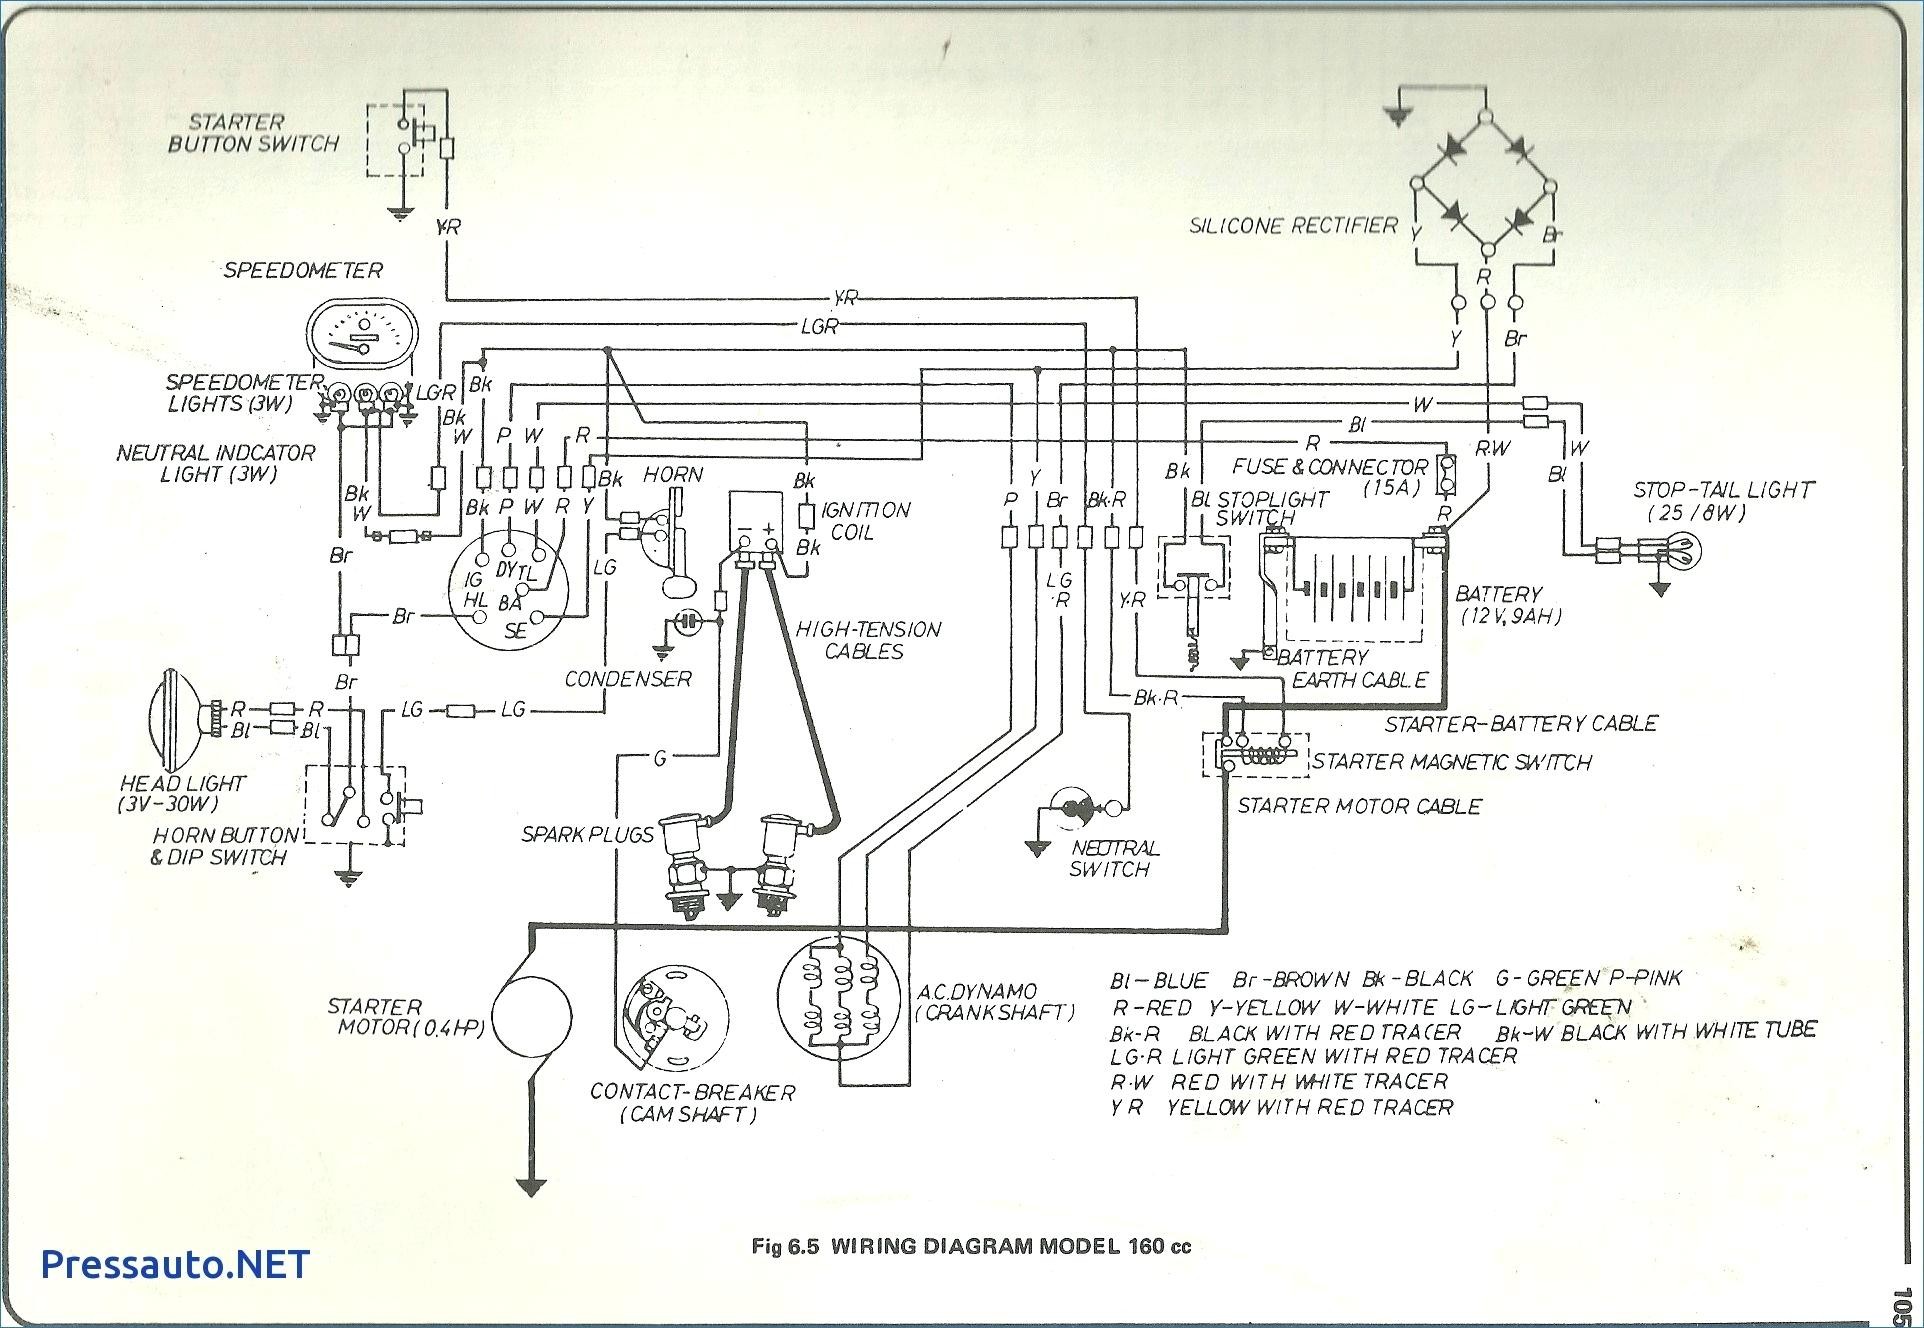 kenmore dryer wiring diagram Collection Wiring Diagram for Kenmore Dryer Beautiful Maytag Dryer Wiring Schematic DOWNLOAD Wiring Diagram